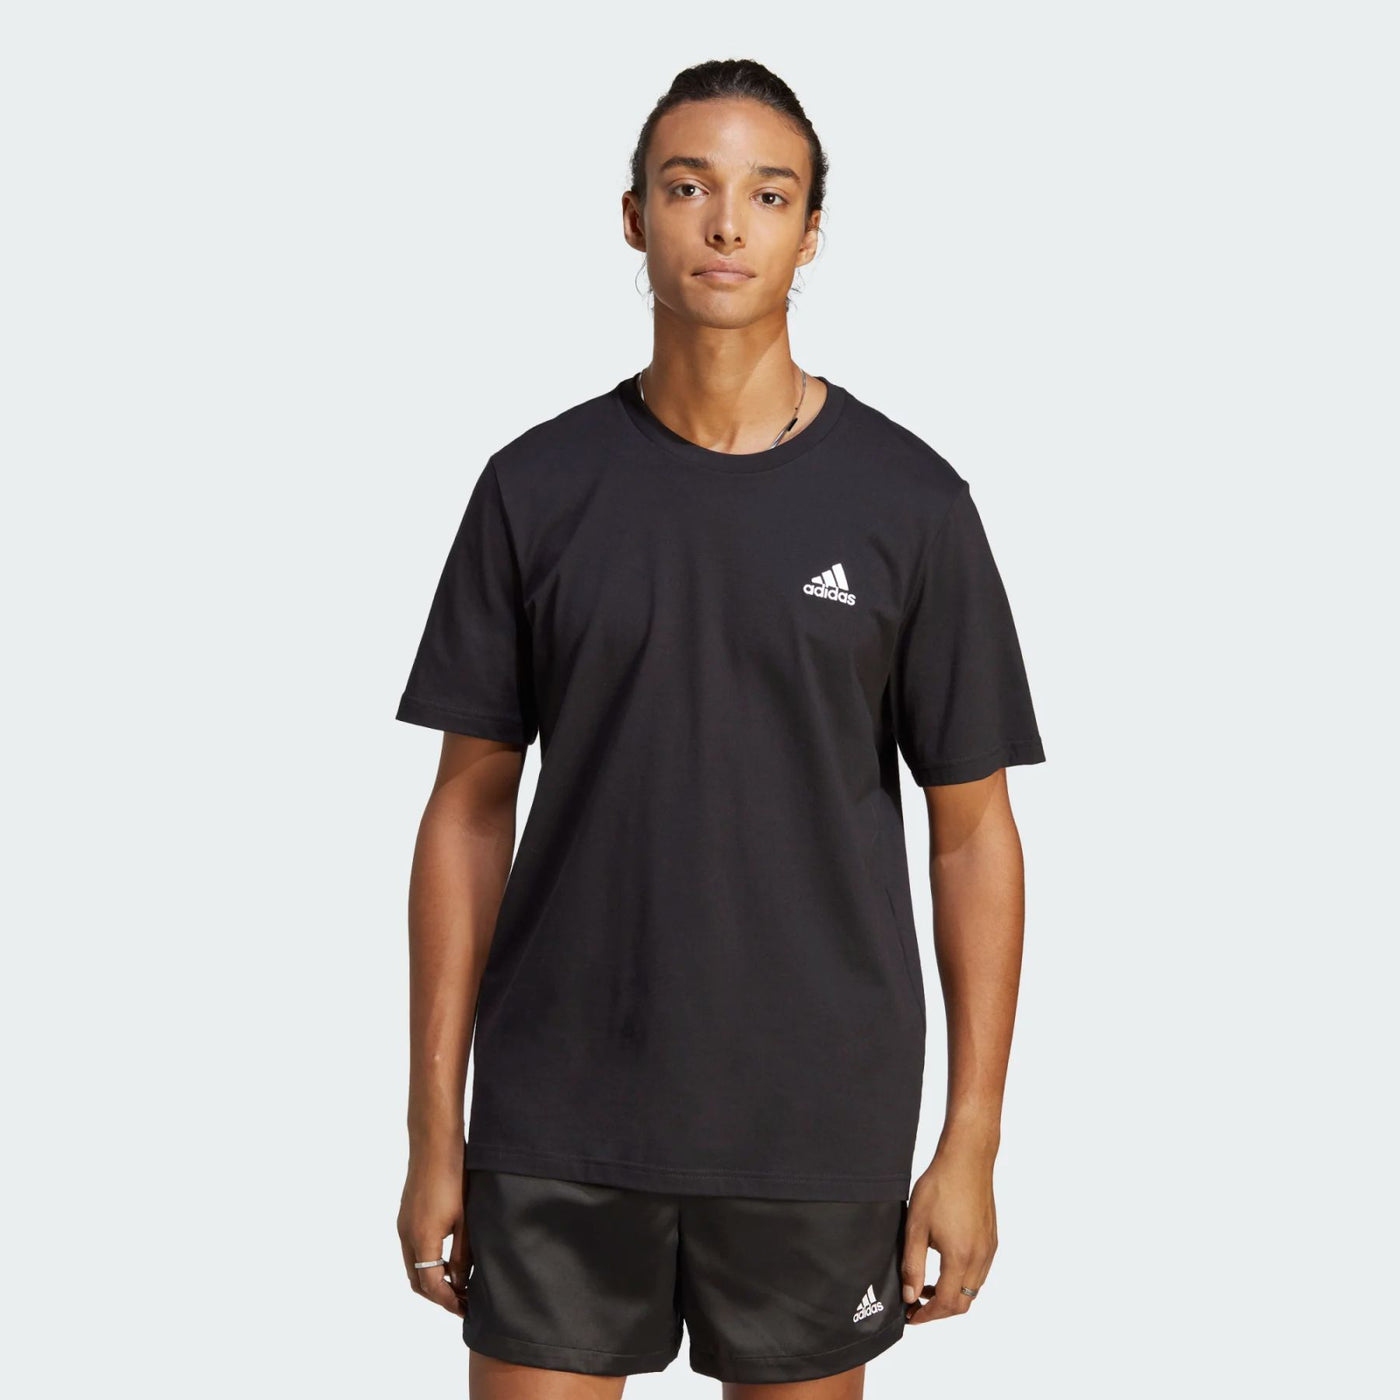 IC9282 - T-Shirt - Adidas